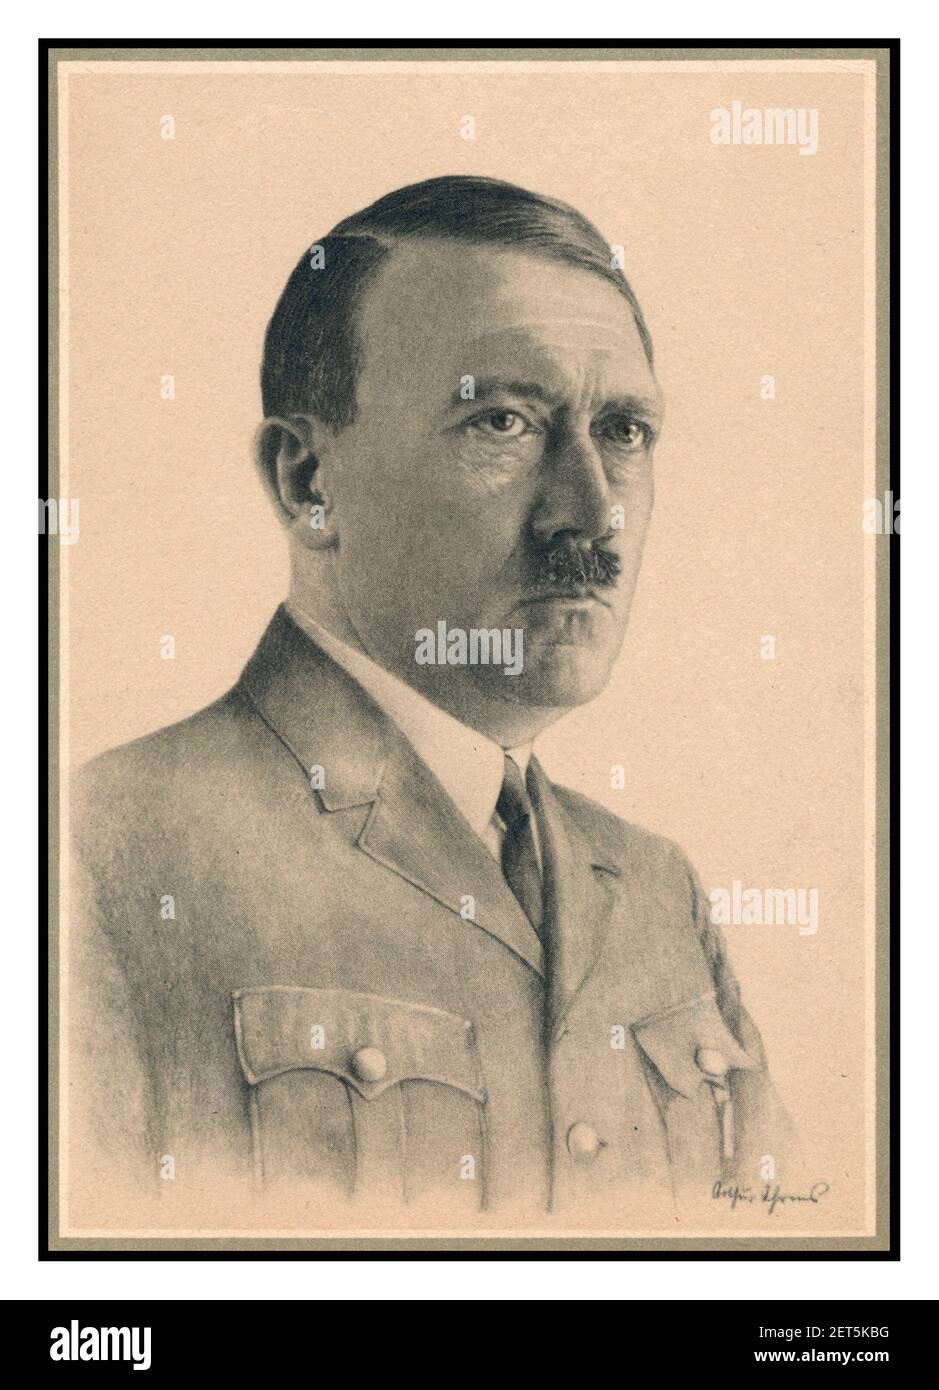 Adolf Hitler illustration Vintage Propaganda toned life like painting portrait of Führer Adolf Hitler 1930's Nazi Germany Stock Photo